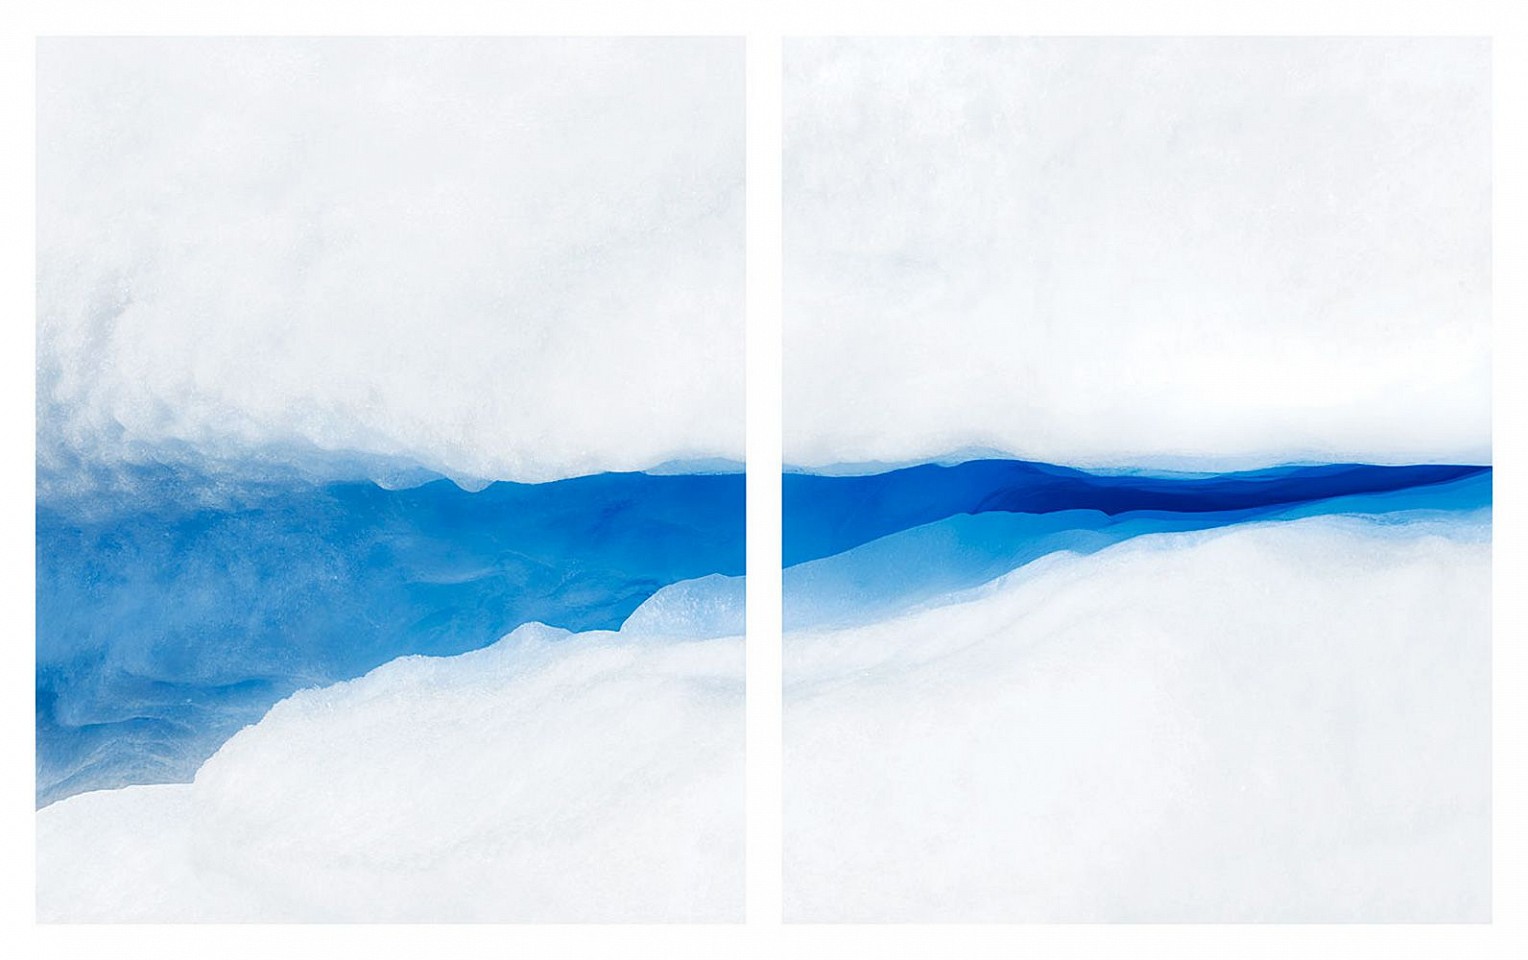 Jonathan Smith, Glacier #24
Chromogenic Print
Available in: 30 x 48 inches, Edition of 8 | 40 x 64 inches, Edition of 5 | 50 x 80 inches, Edition of 3 | 70 x 112 inches, Edition of 2
7565